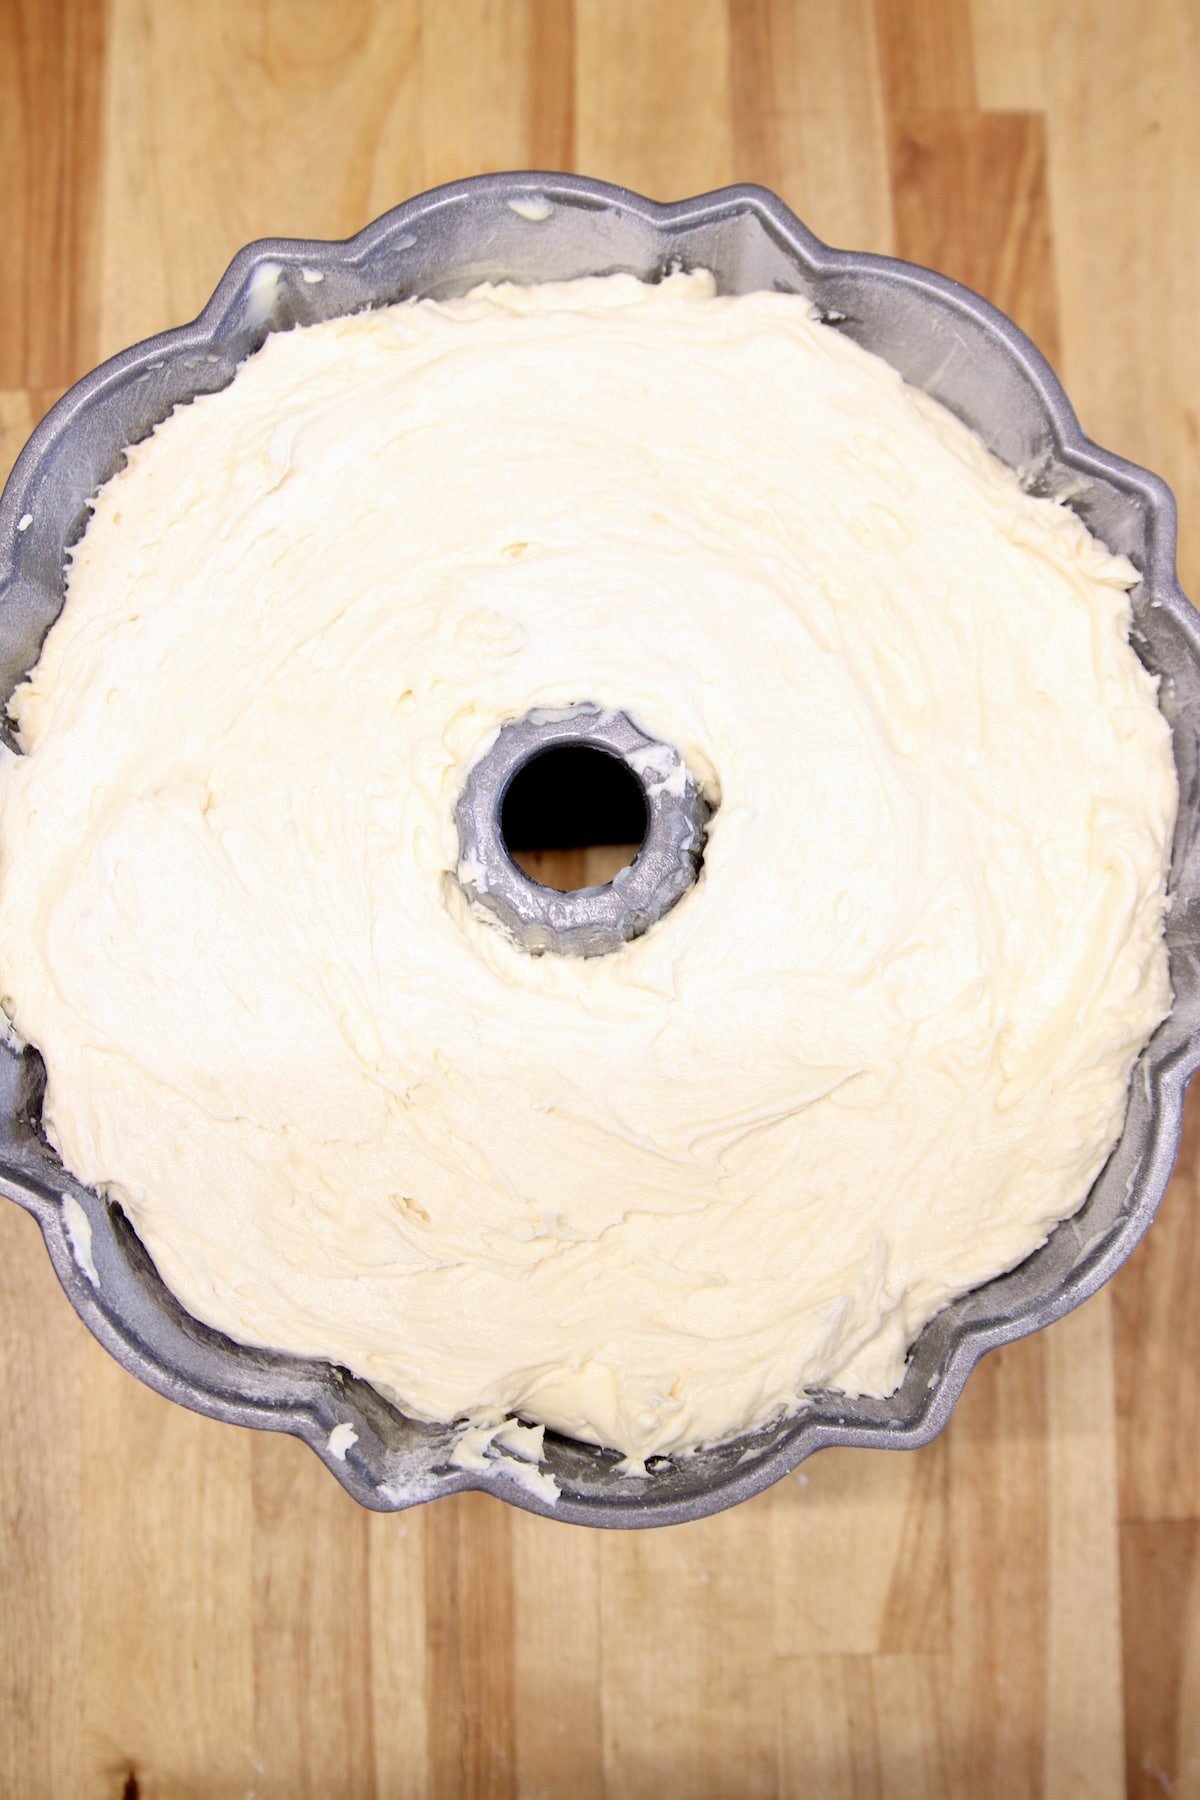 Pound cake batter in a bundt pan.